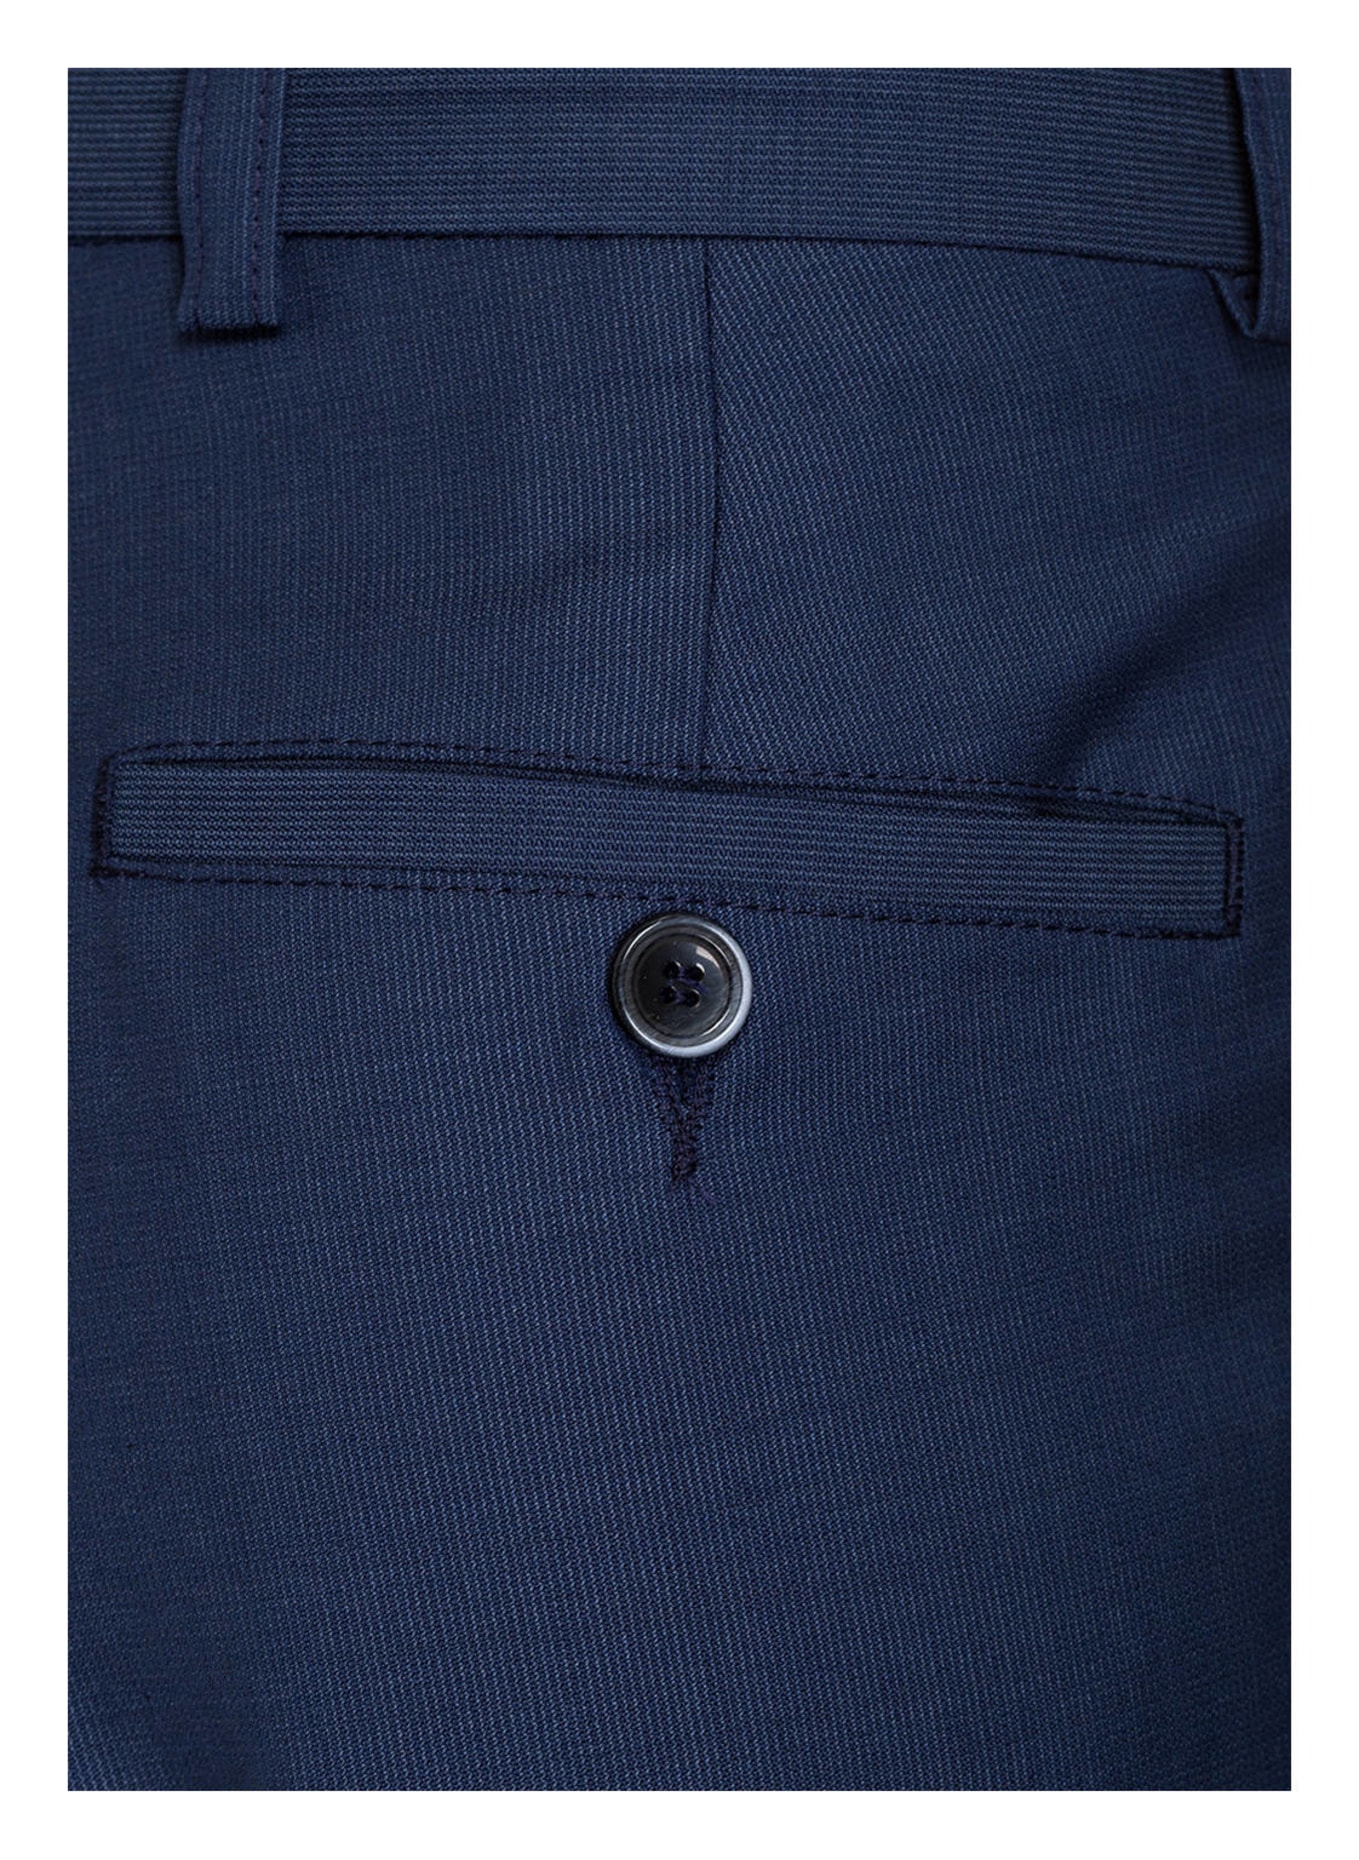 G.O.L. FINEST COLLECTION Anzughose Slim Fit, Farbe: BLAU (Bild 3)